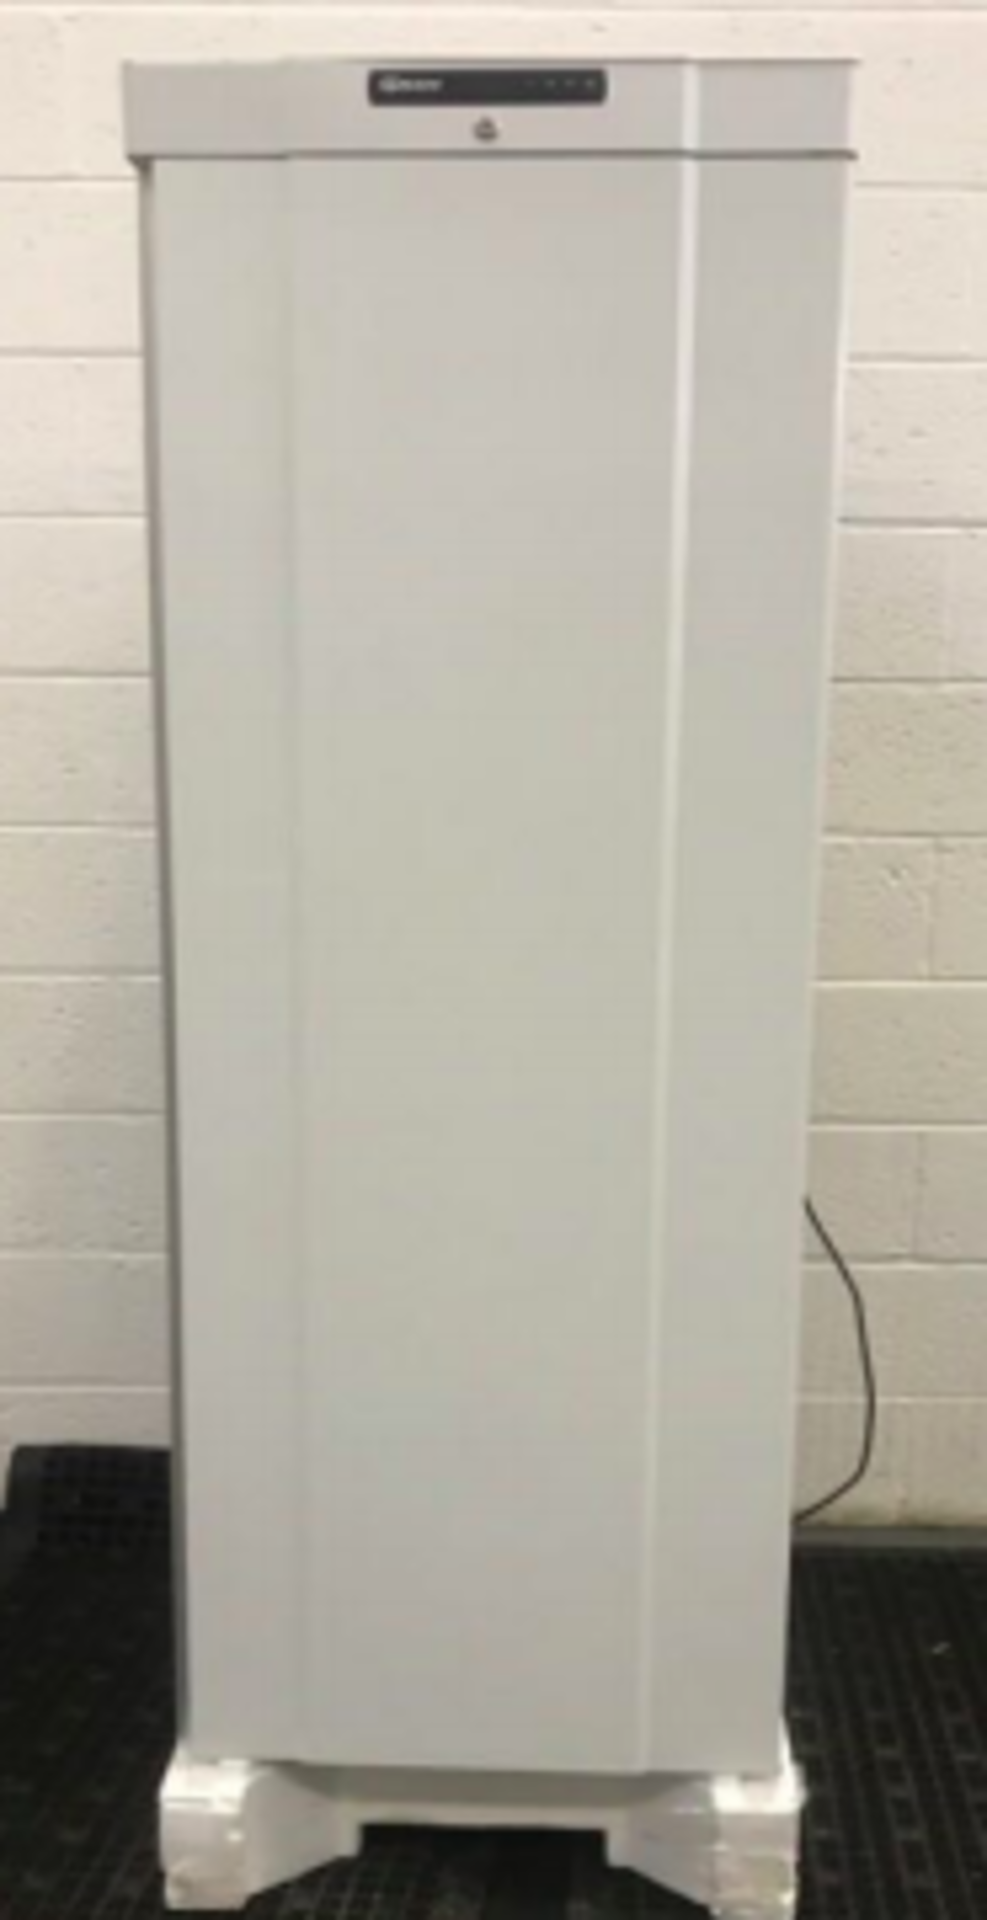 Compact refrigerator K 410 LG C 6W - Image 12 of 13